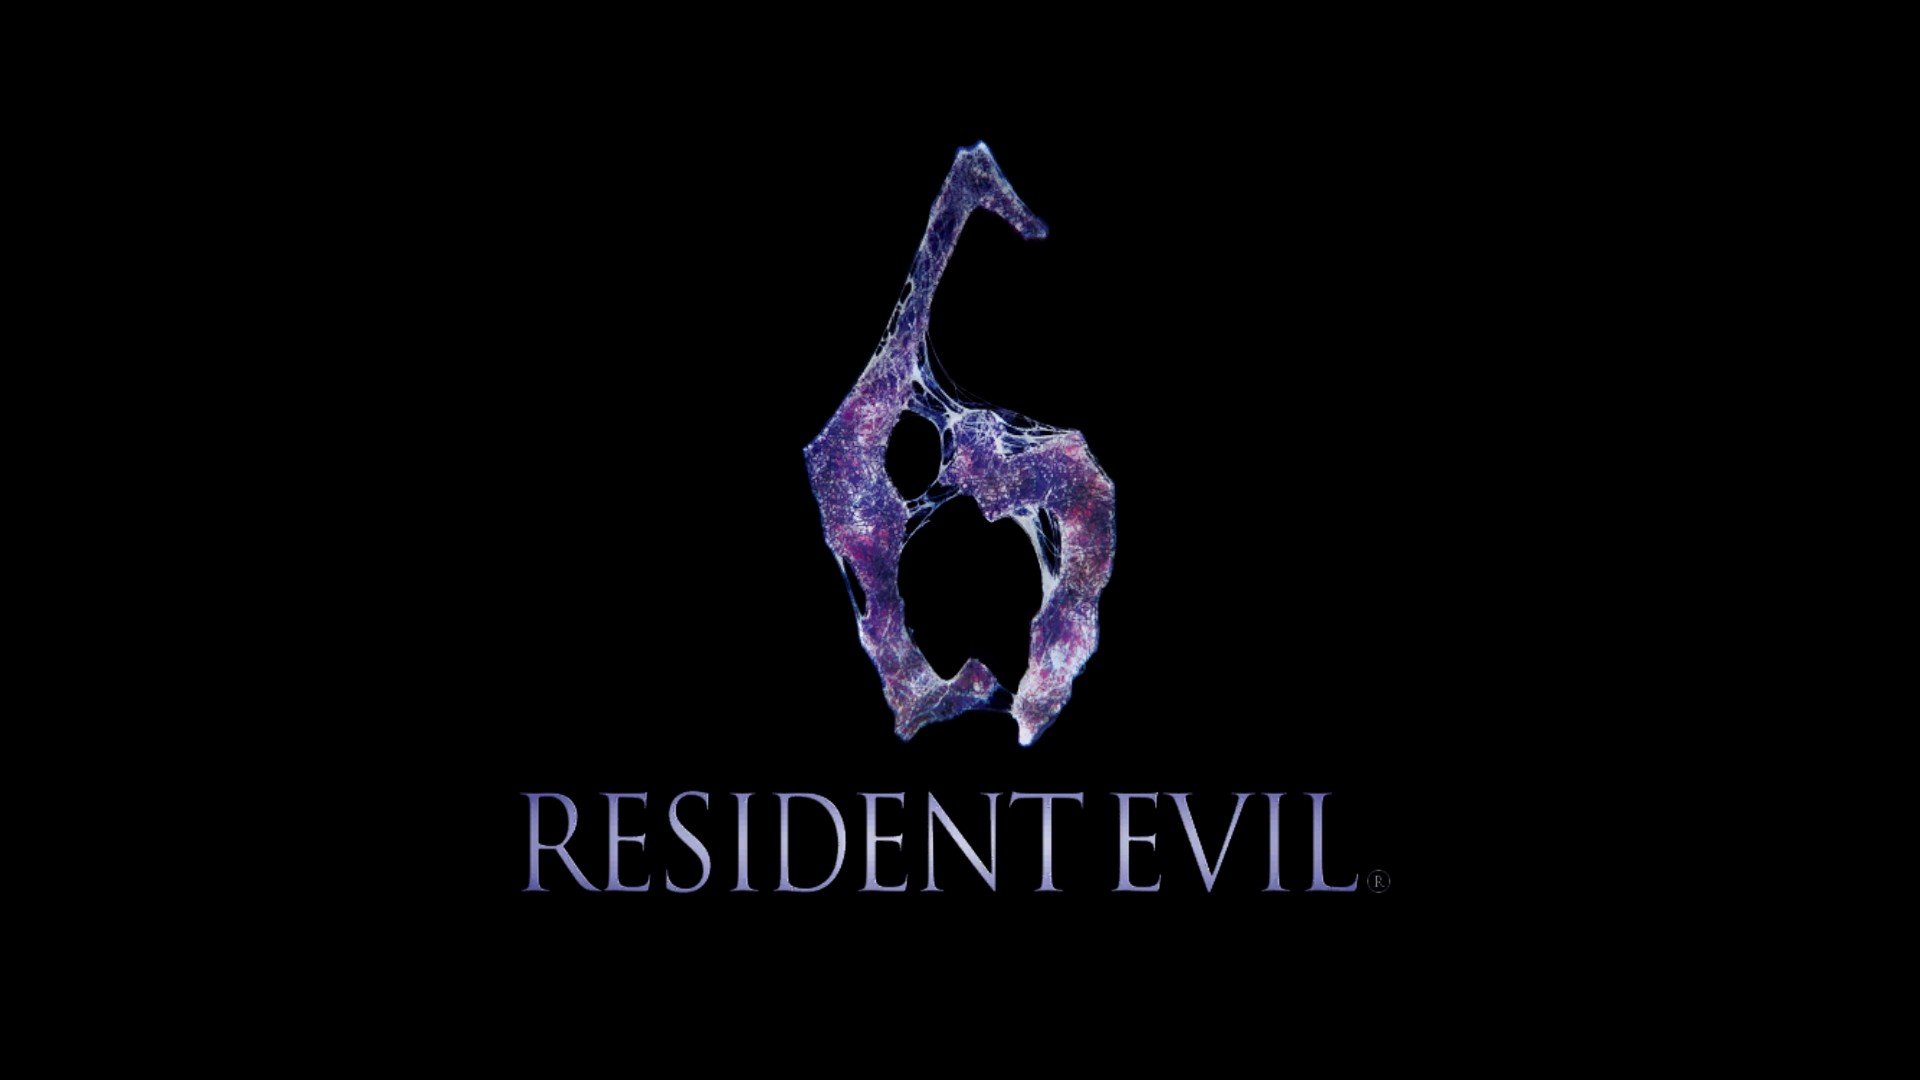 High resolution Resident Evil 6 full hd wallpaper ID:334176 for computer